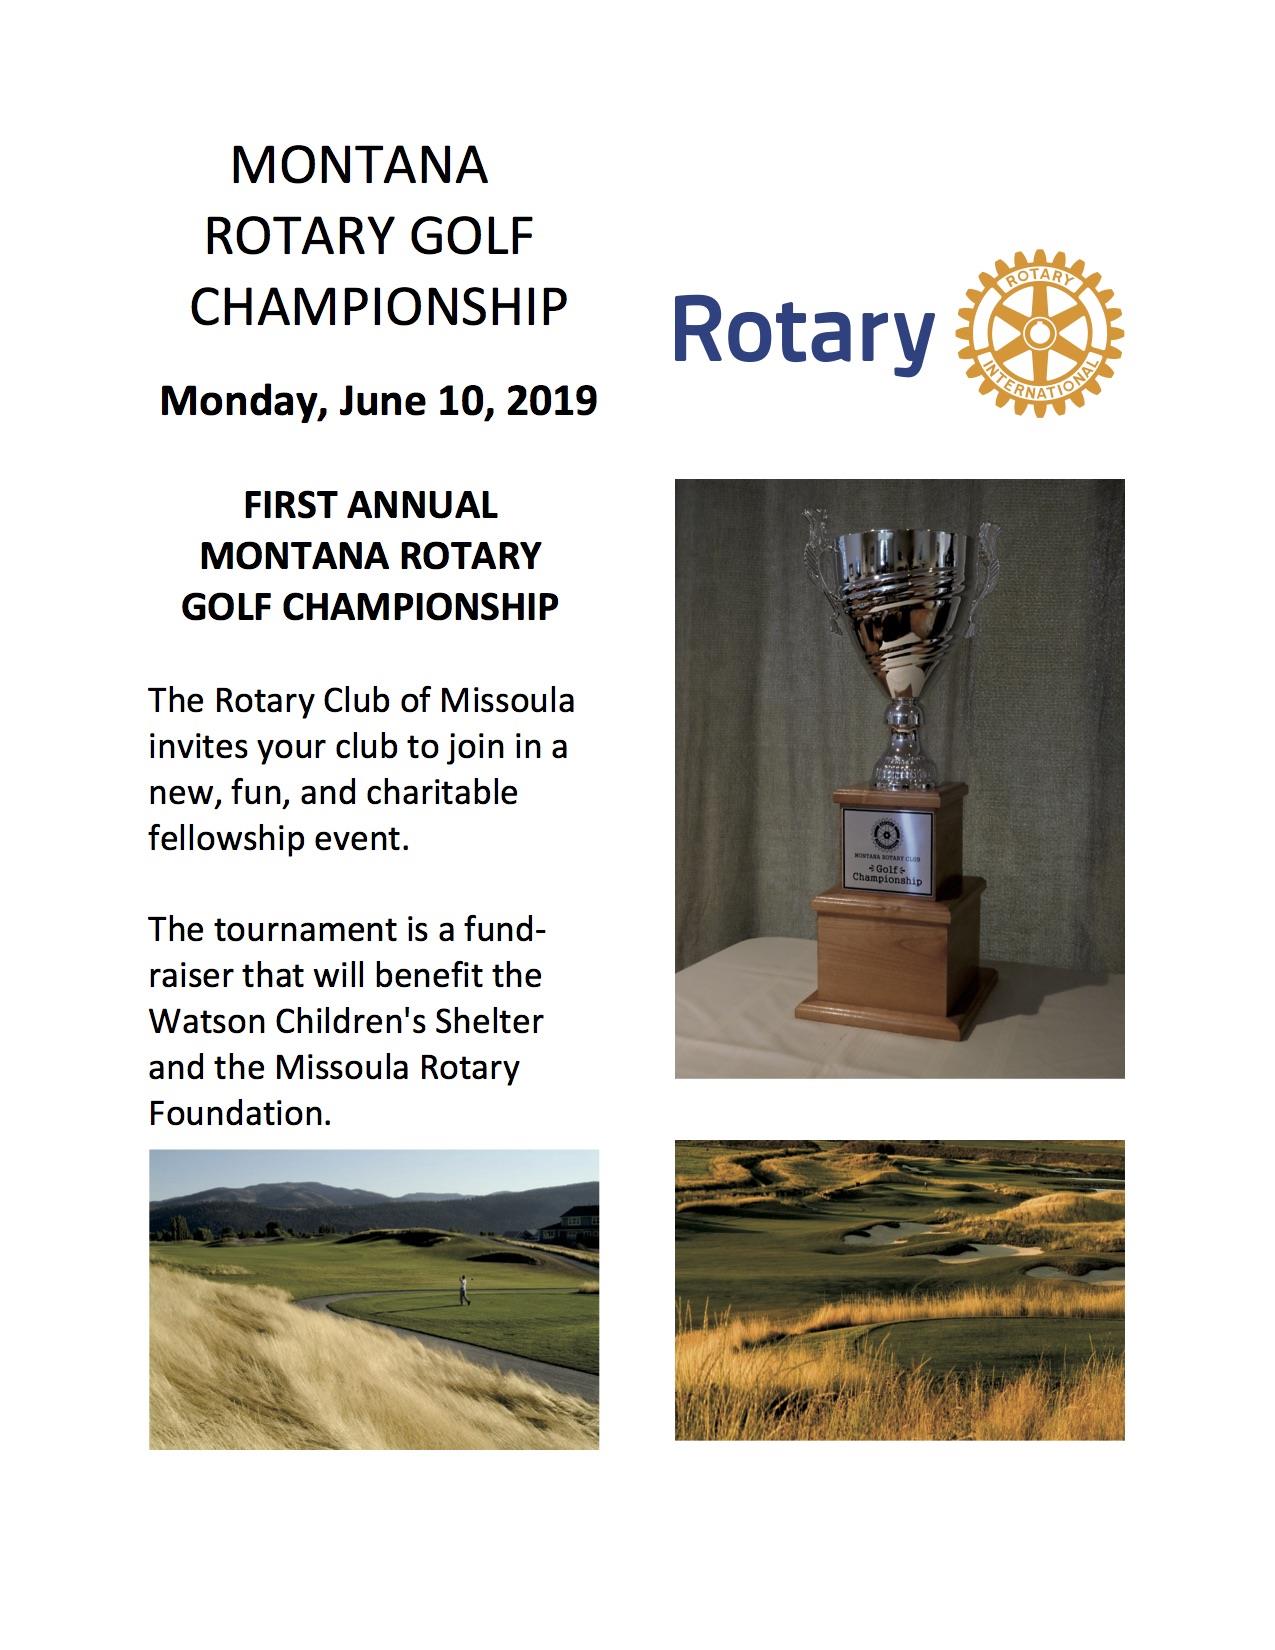 Montana Rotary Golf Tournament Rotary Club of Missoula